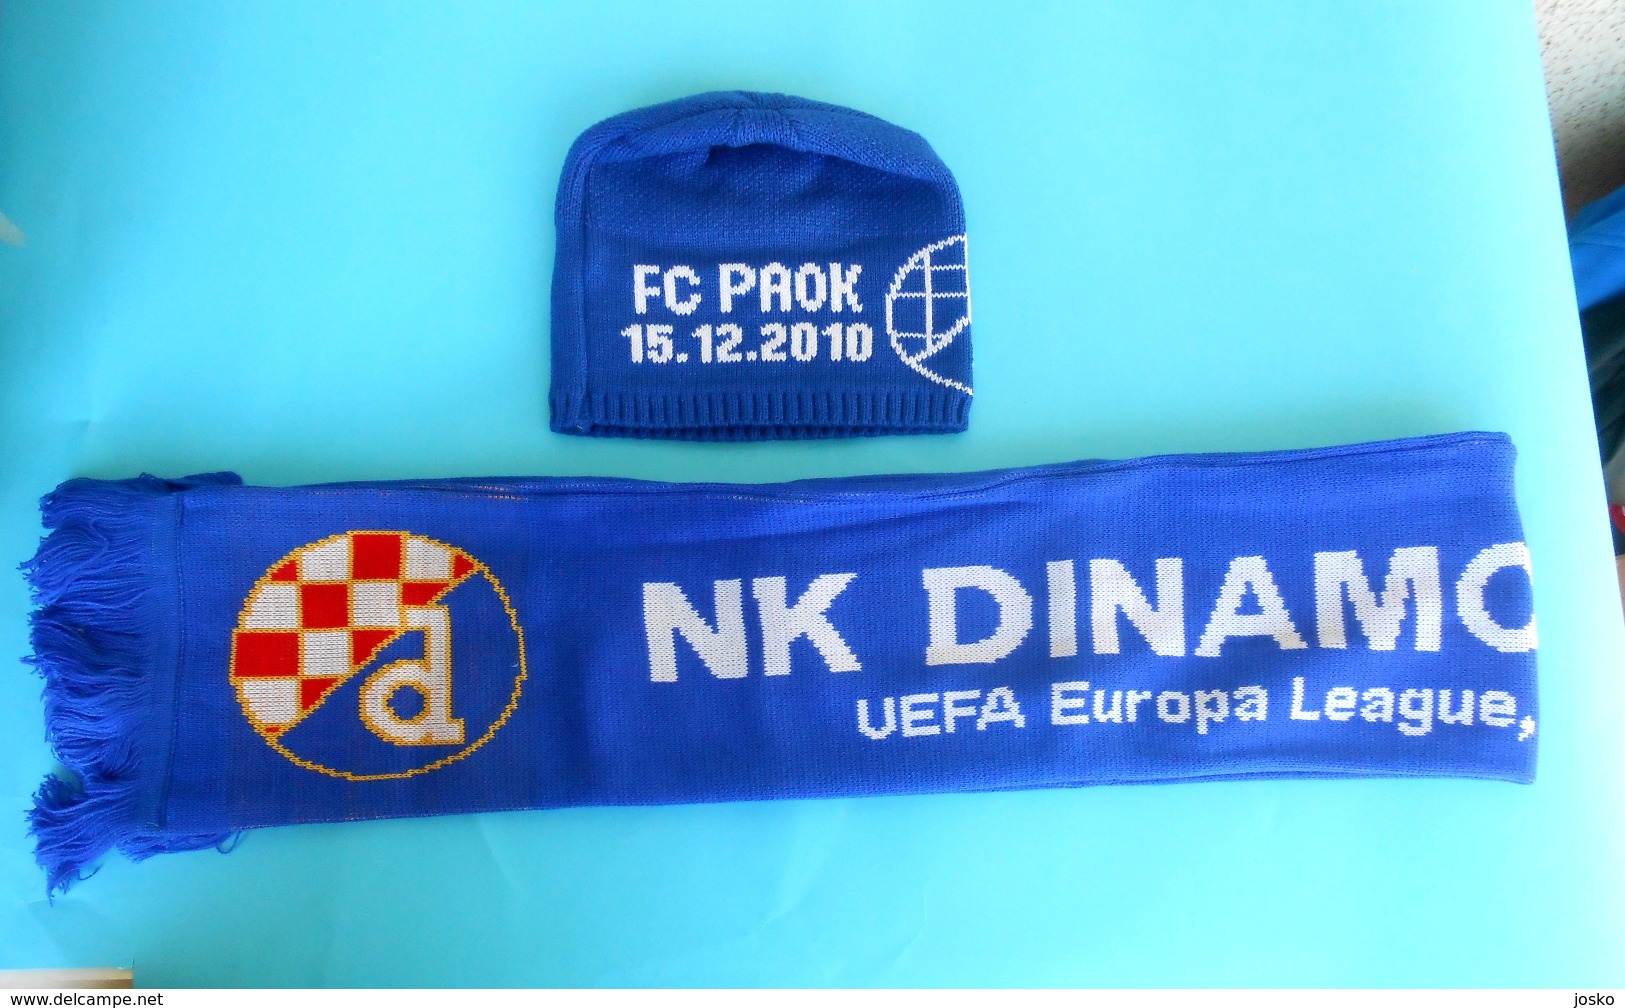 DINAMO ZAGREB Vs PAOK FC - 2010 UEFA Europa League * Football Scarf + Cap Ultras Soccer Fussball Thessaloniki Greece - Apparel, Souvenirs & Other